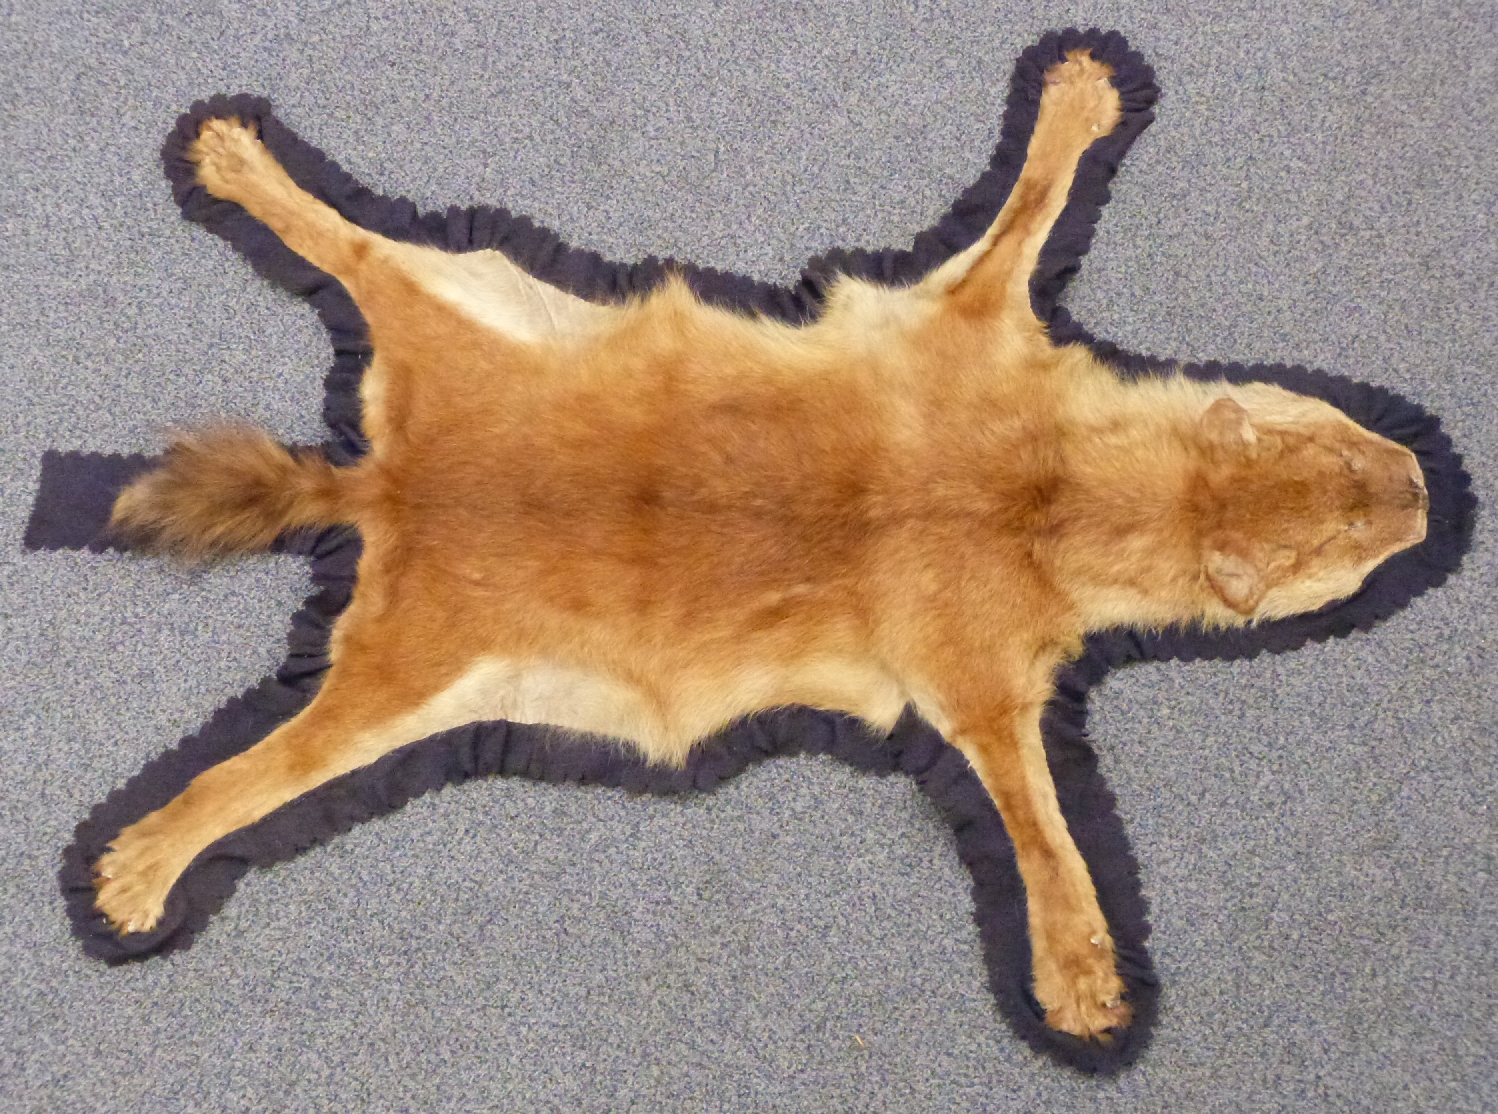 19thC mountain lion skin mounted on black felt with scalloped edges, approximately 137 x 105cm